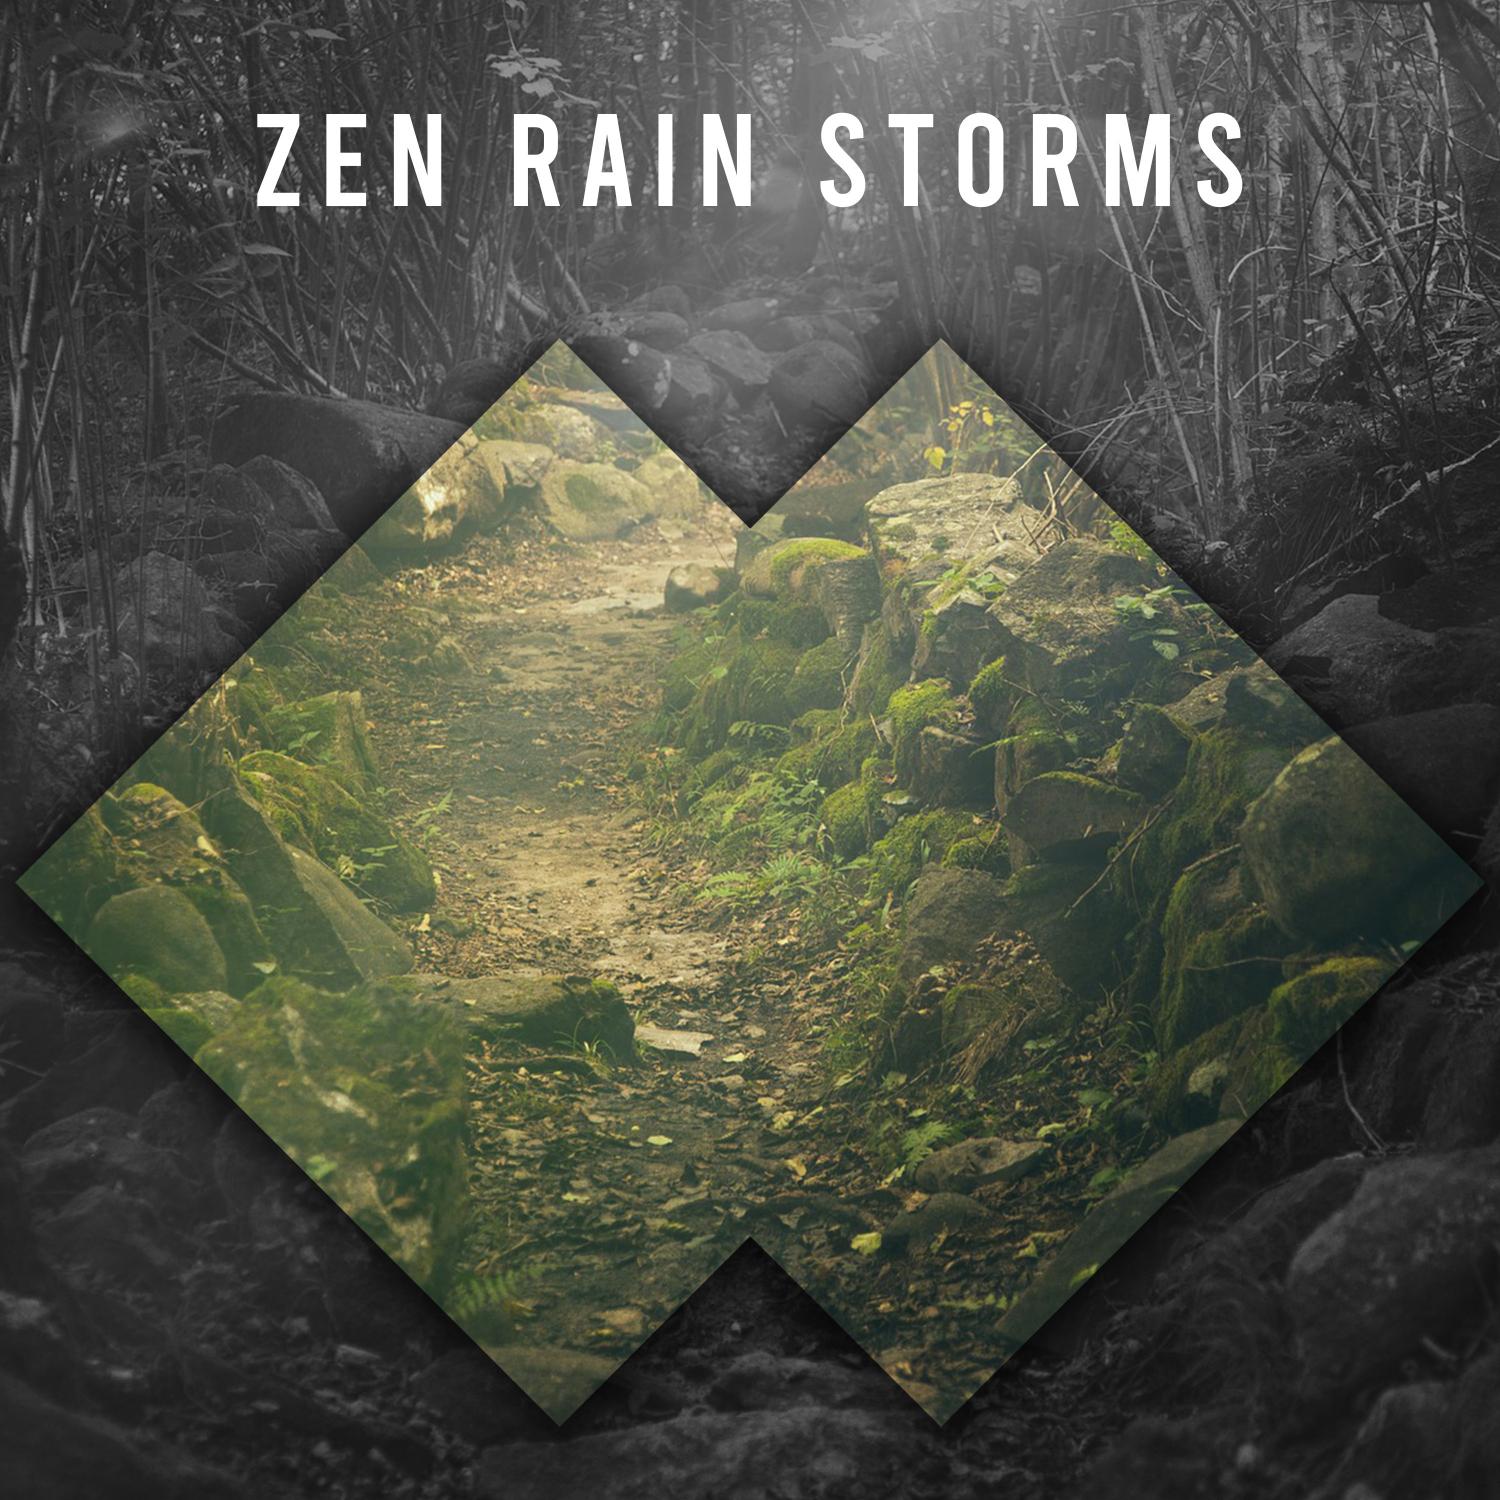 18 Zen Rain Storms for Yoga and Meditation